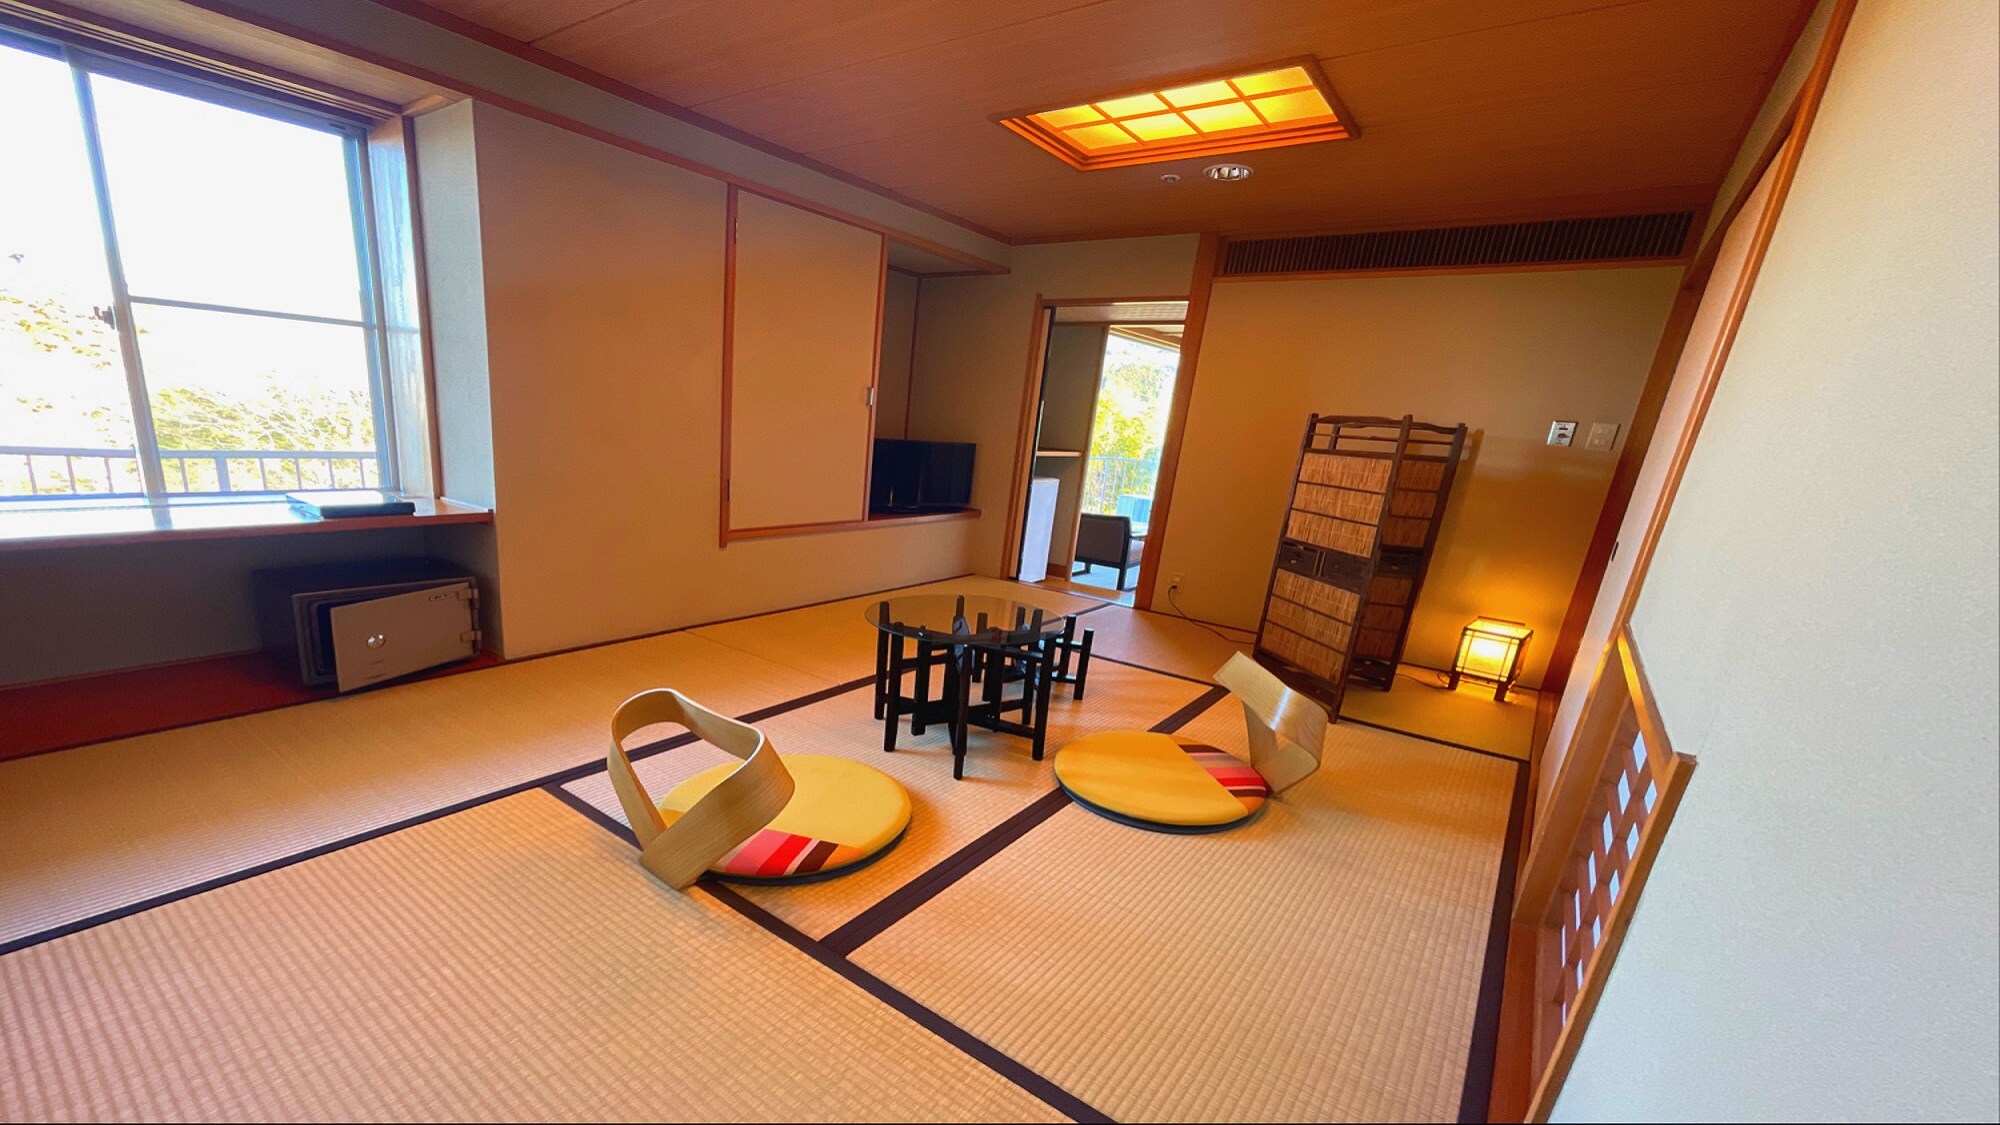 Special room "Genyo" Next room 8 tatami mats